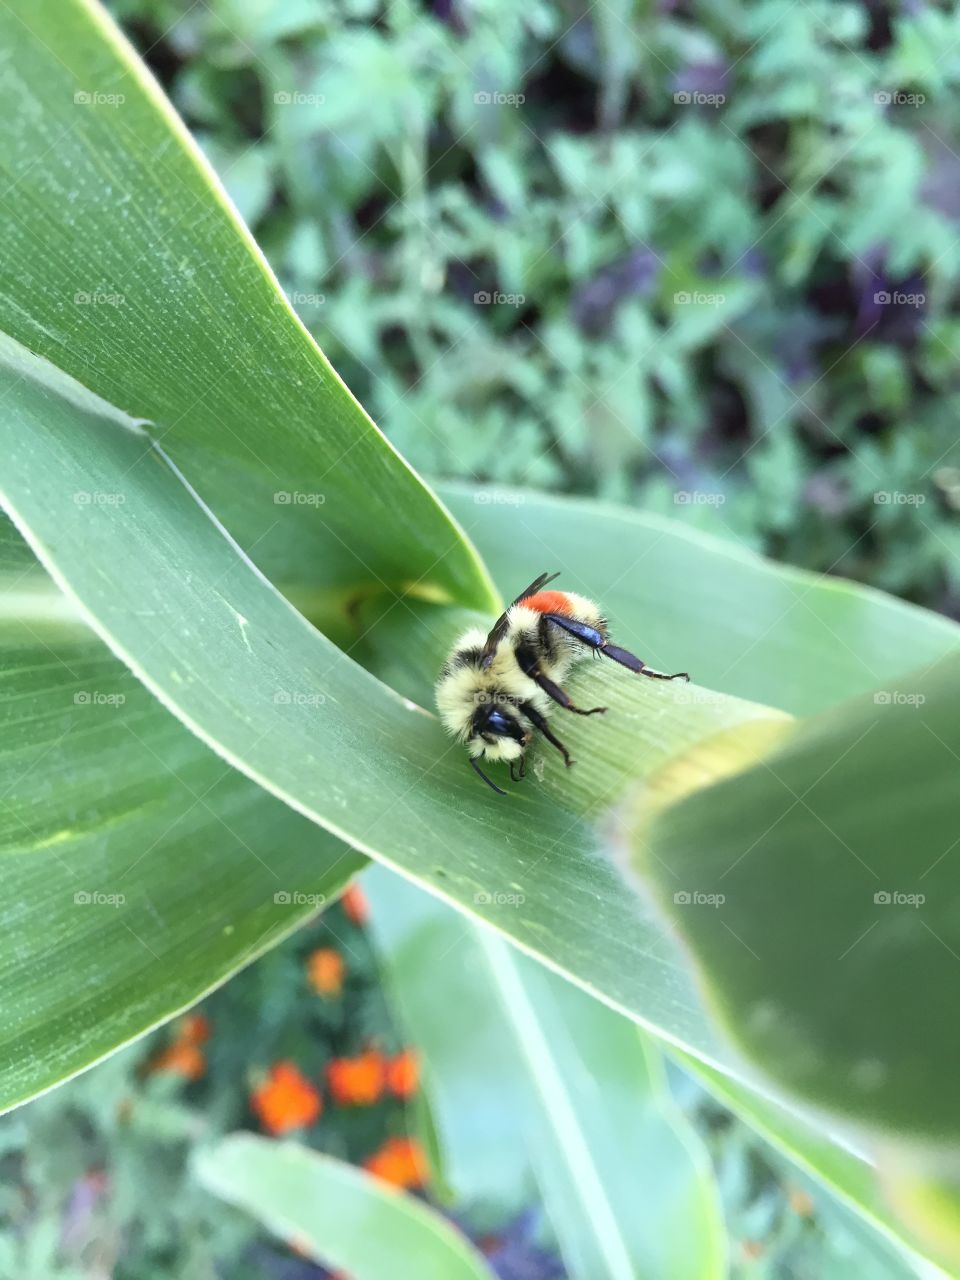 Bumble Bee on cornstalk 